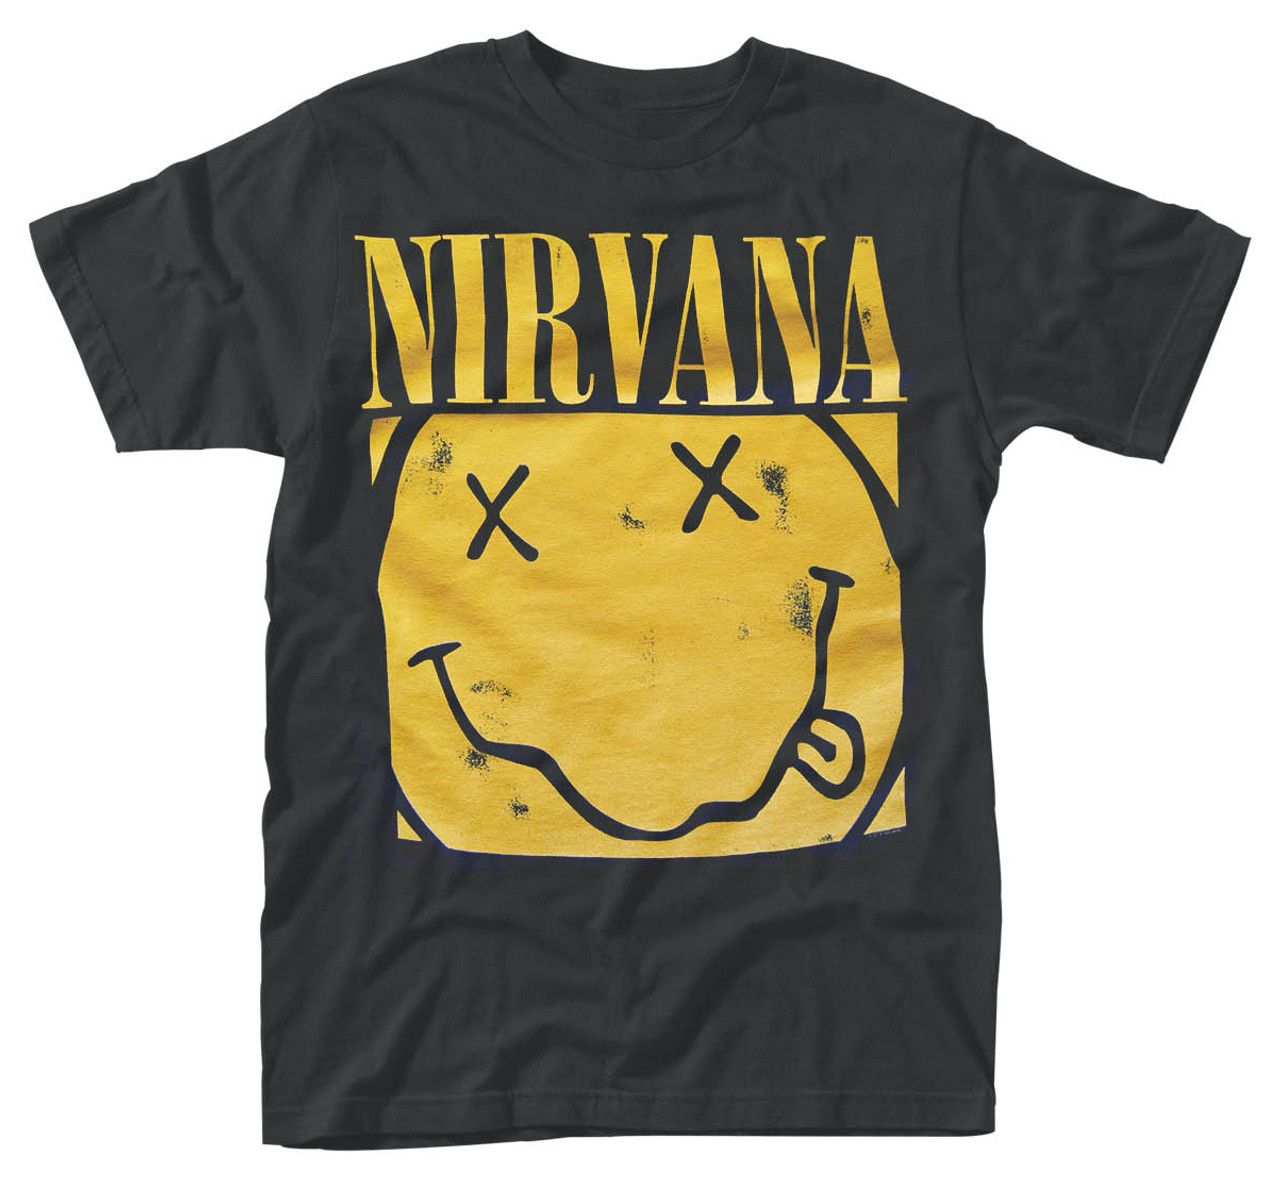 Nirvana t. Nirvana Merch футболки. Мерч Нирвана футболка. Нирвана мерч. Nirvana t Shirt 90s.